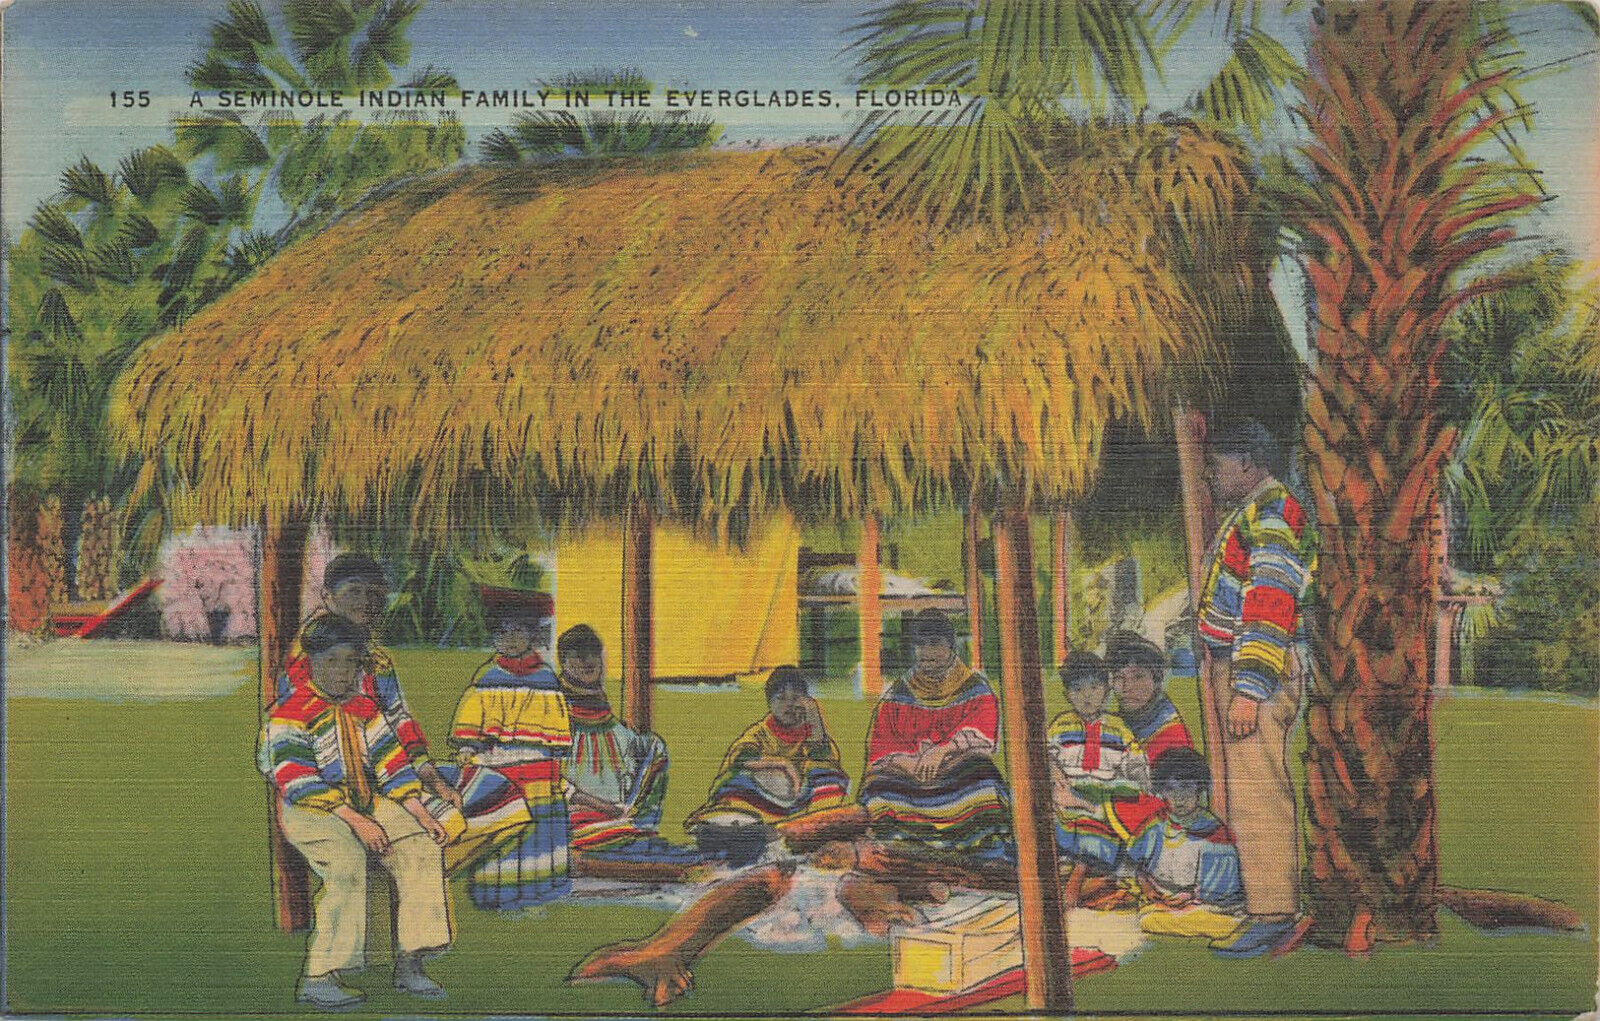 SEMINOLE INDIAN FAMILY IN EVERGLADES POSTCARD MIAMI FL FLORIDA 1940s